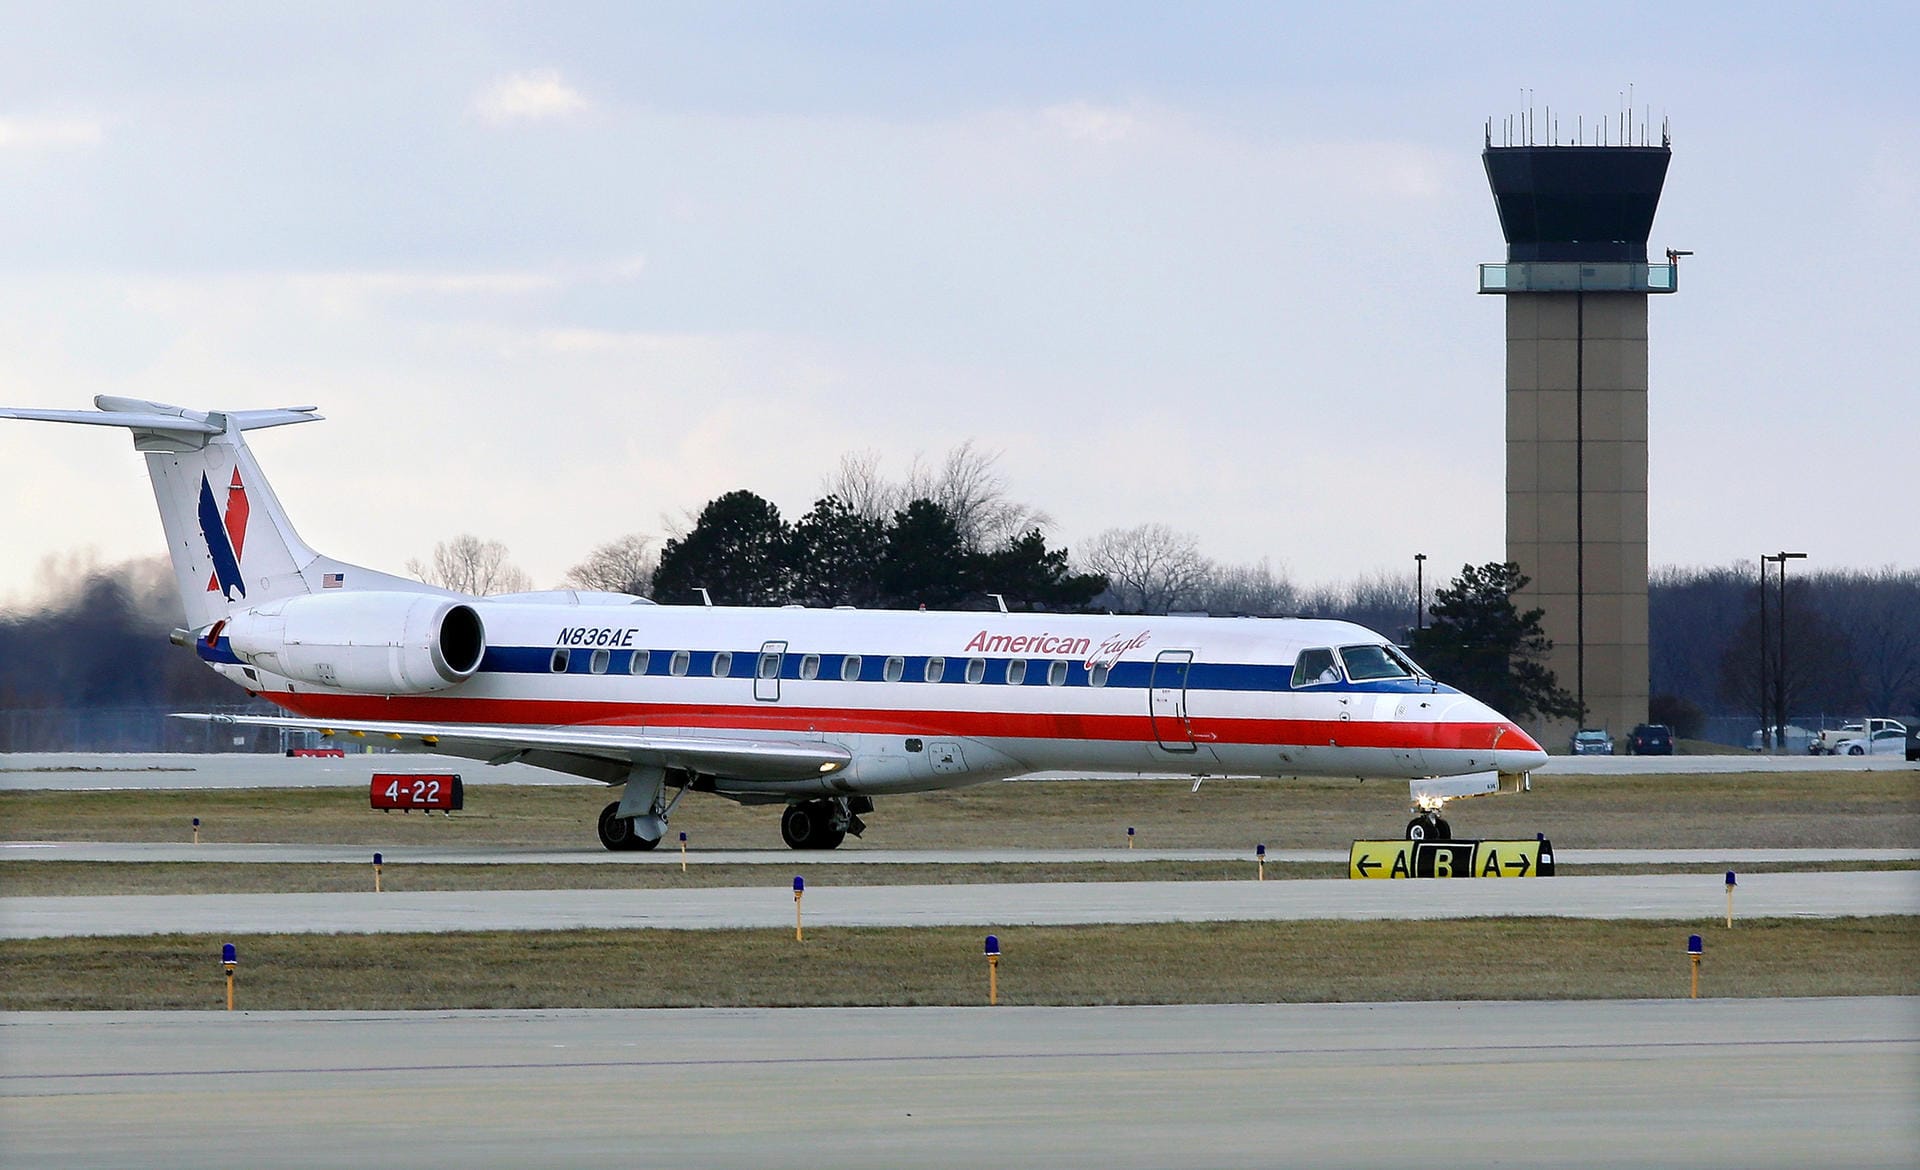 Platz fünf sicherte sich American Eagle - hier am Abraham Lincoln Capital Airport in Springfield zu sehen.